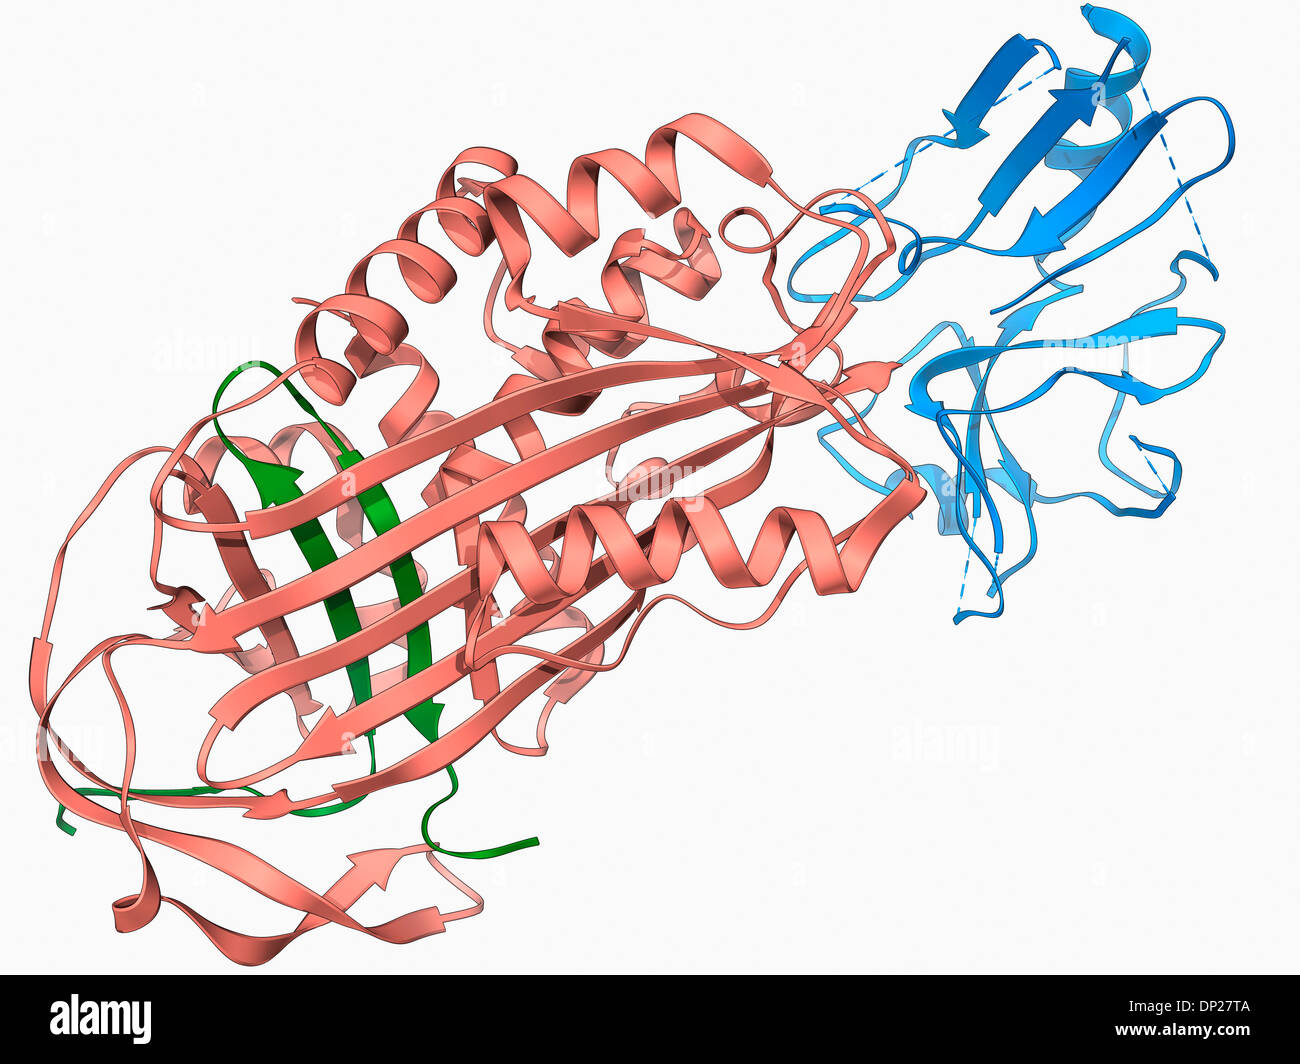 Proteinase inhibitor molecule Stock Photo